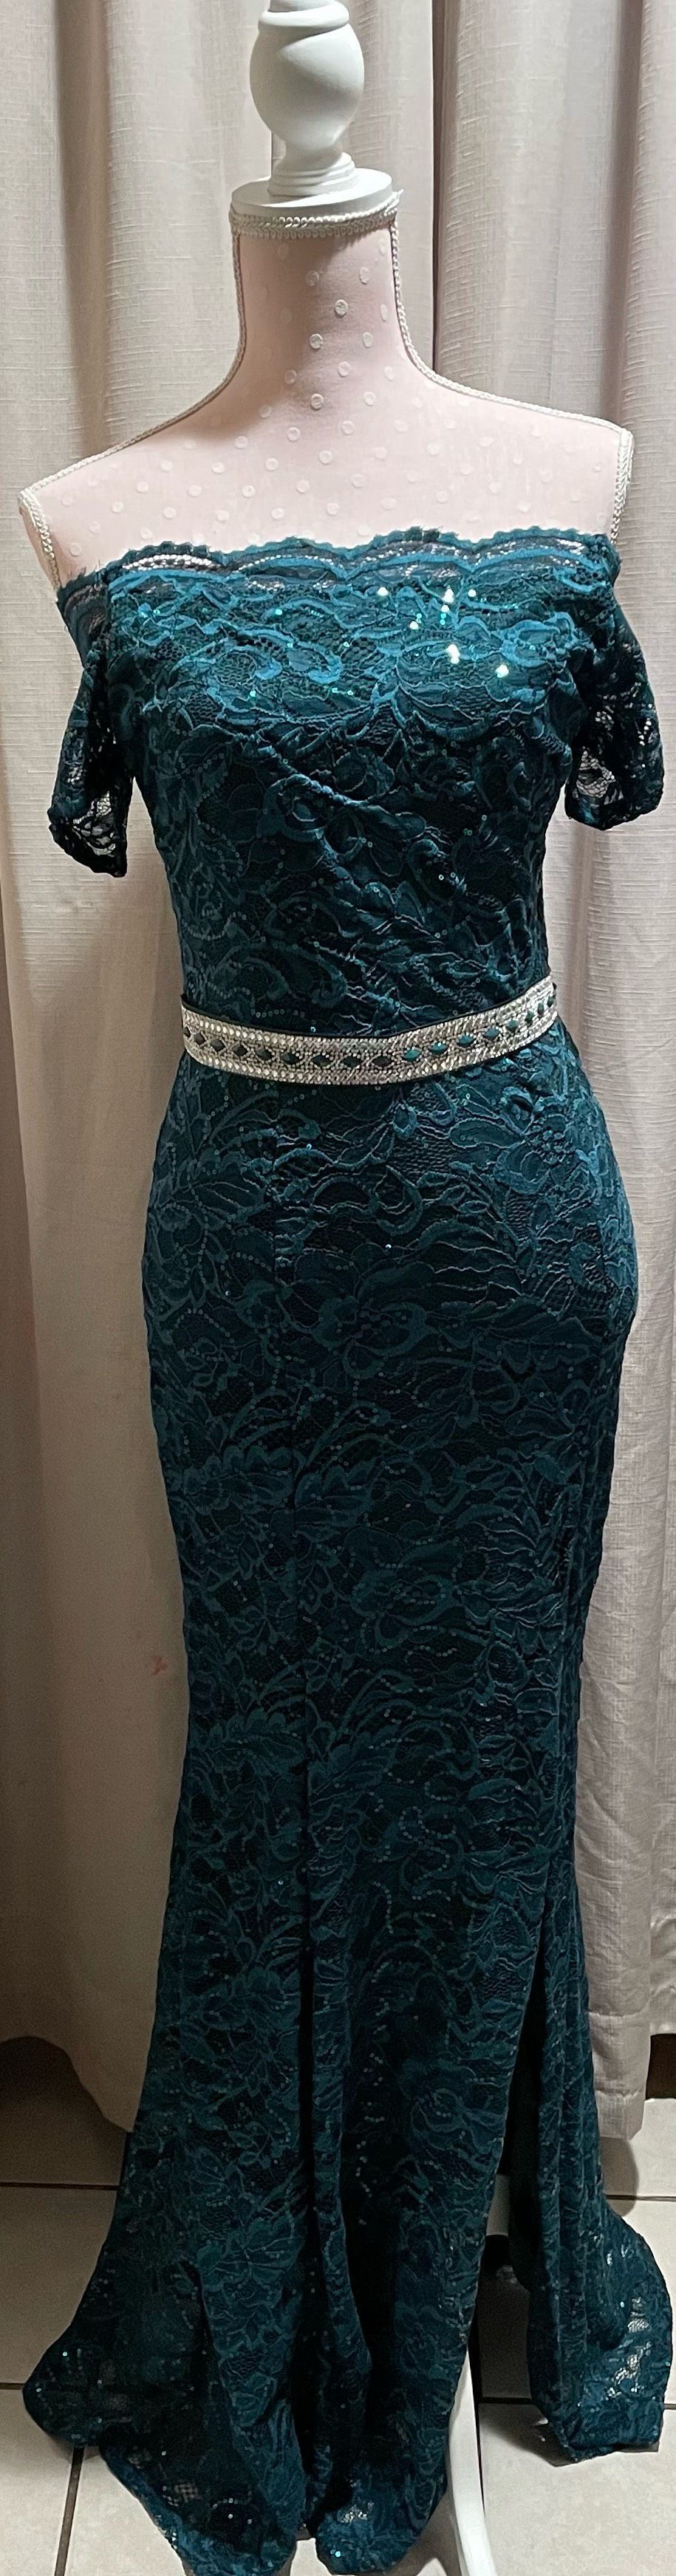 Size 4 Off The Shoulder Emerald Green Side Slit Dress on Queenly